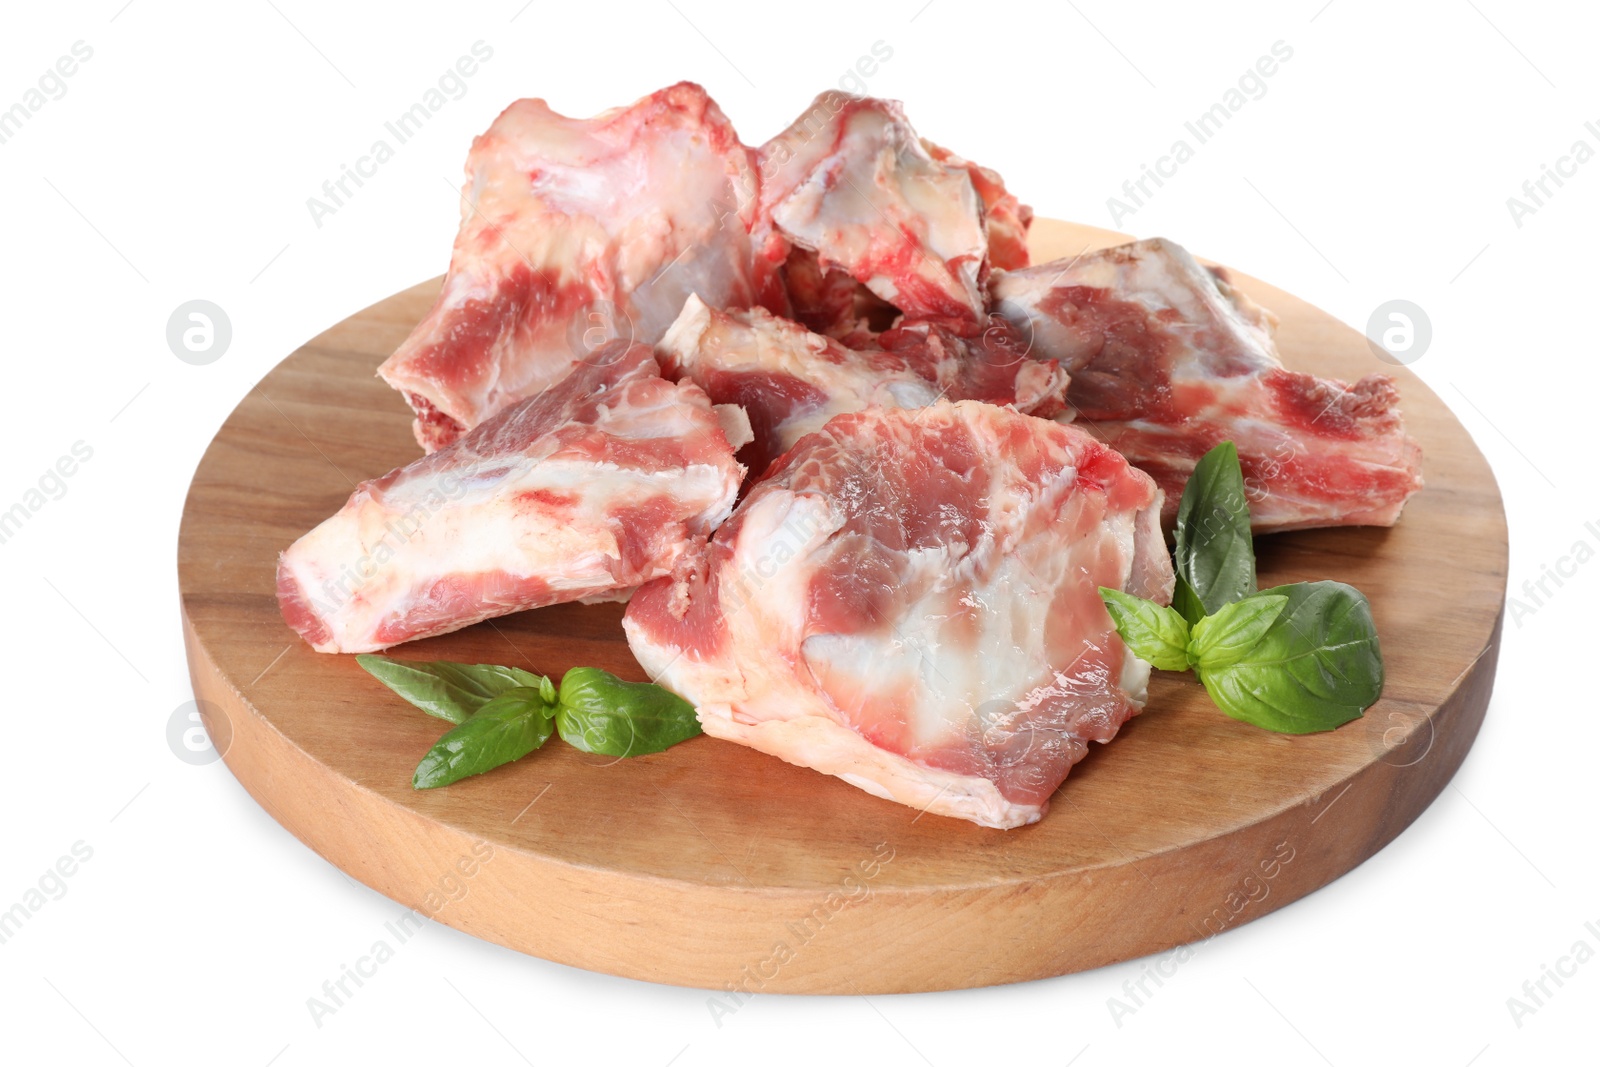 Photo of Raw meaty bones and basil on white background